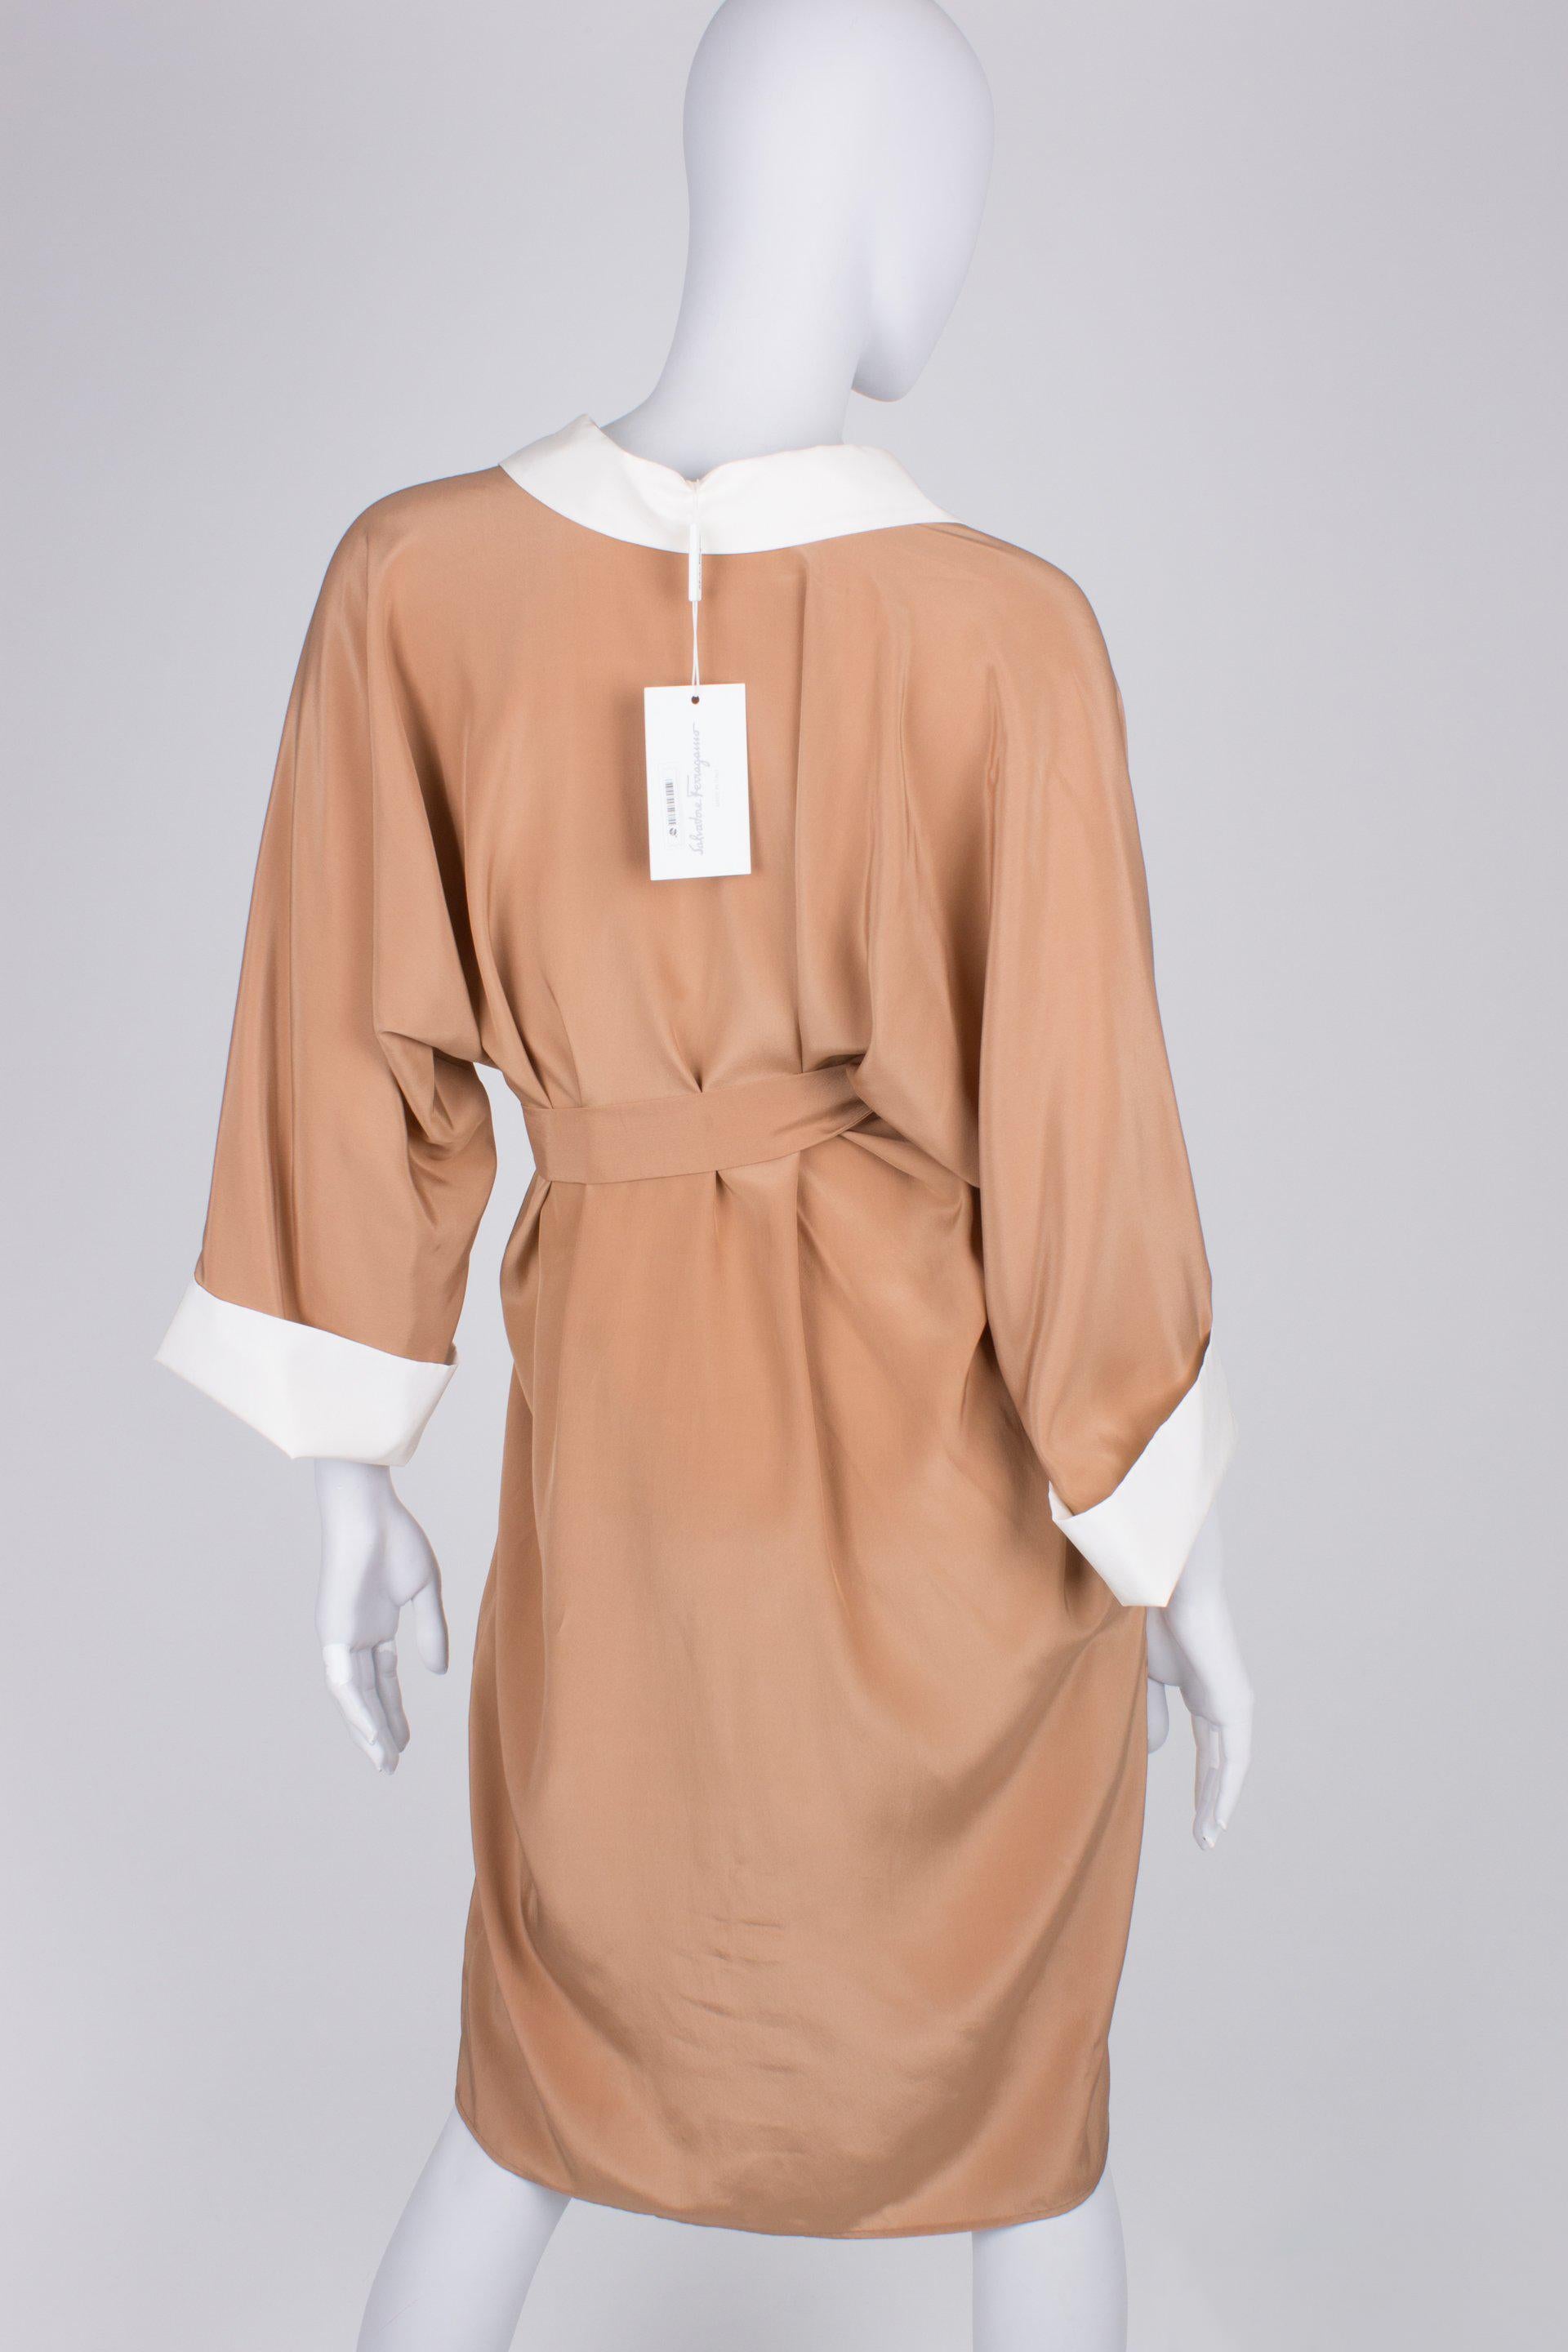 Salvatore Ferragamo Silk Dress - camel/white In New Condition For Sale In Baarn, NL